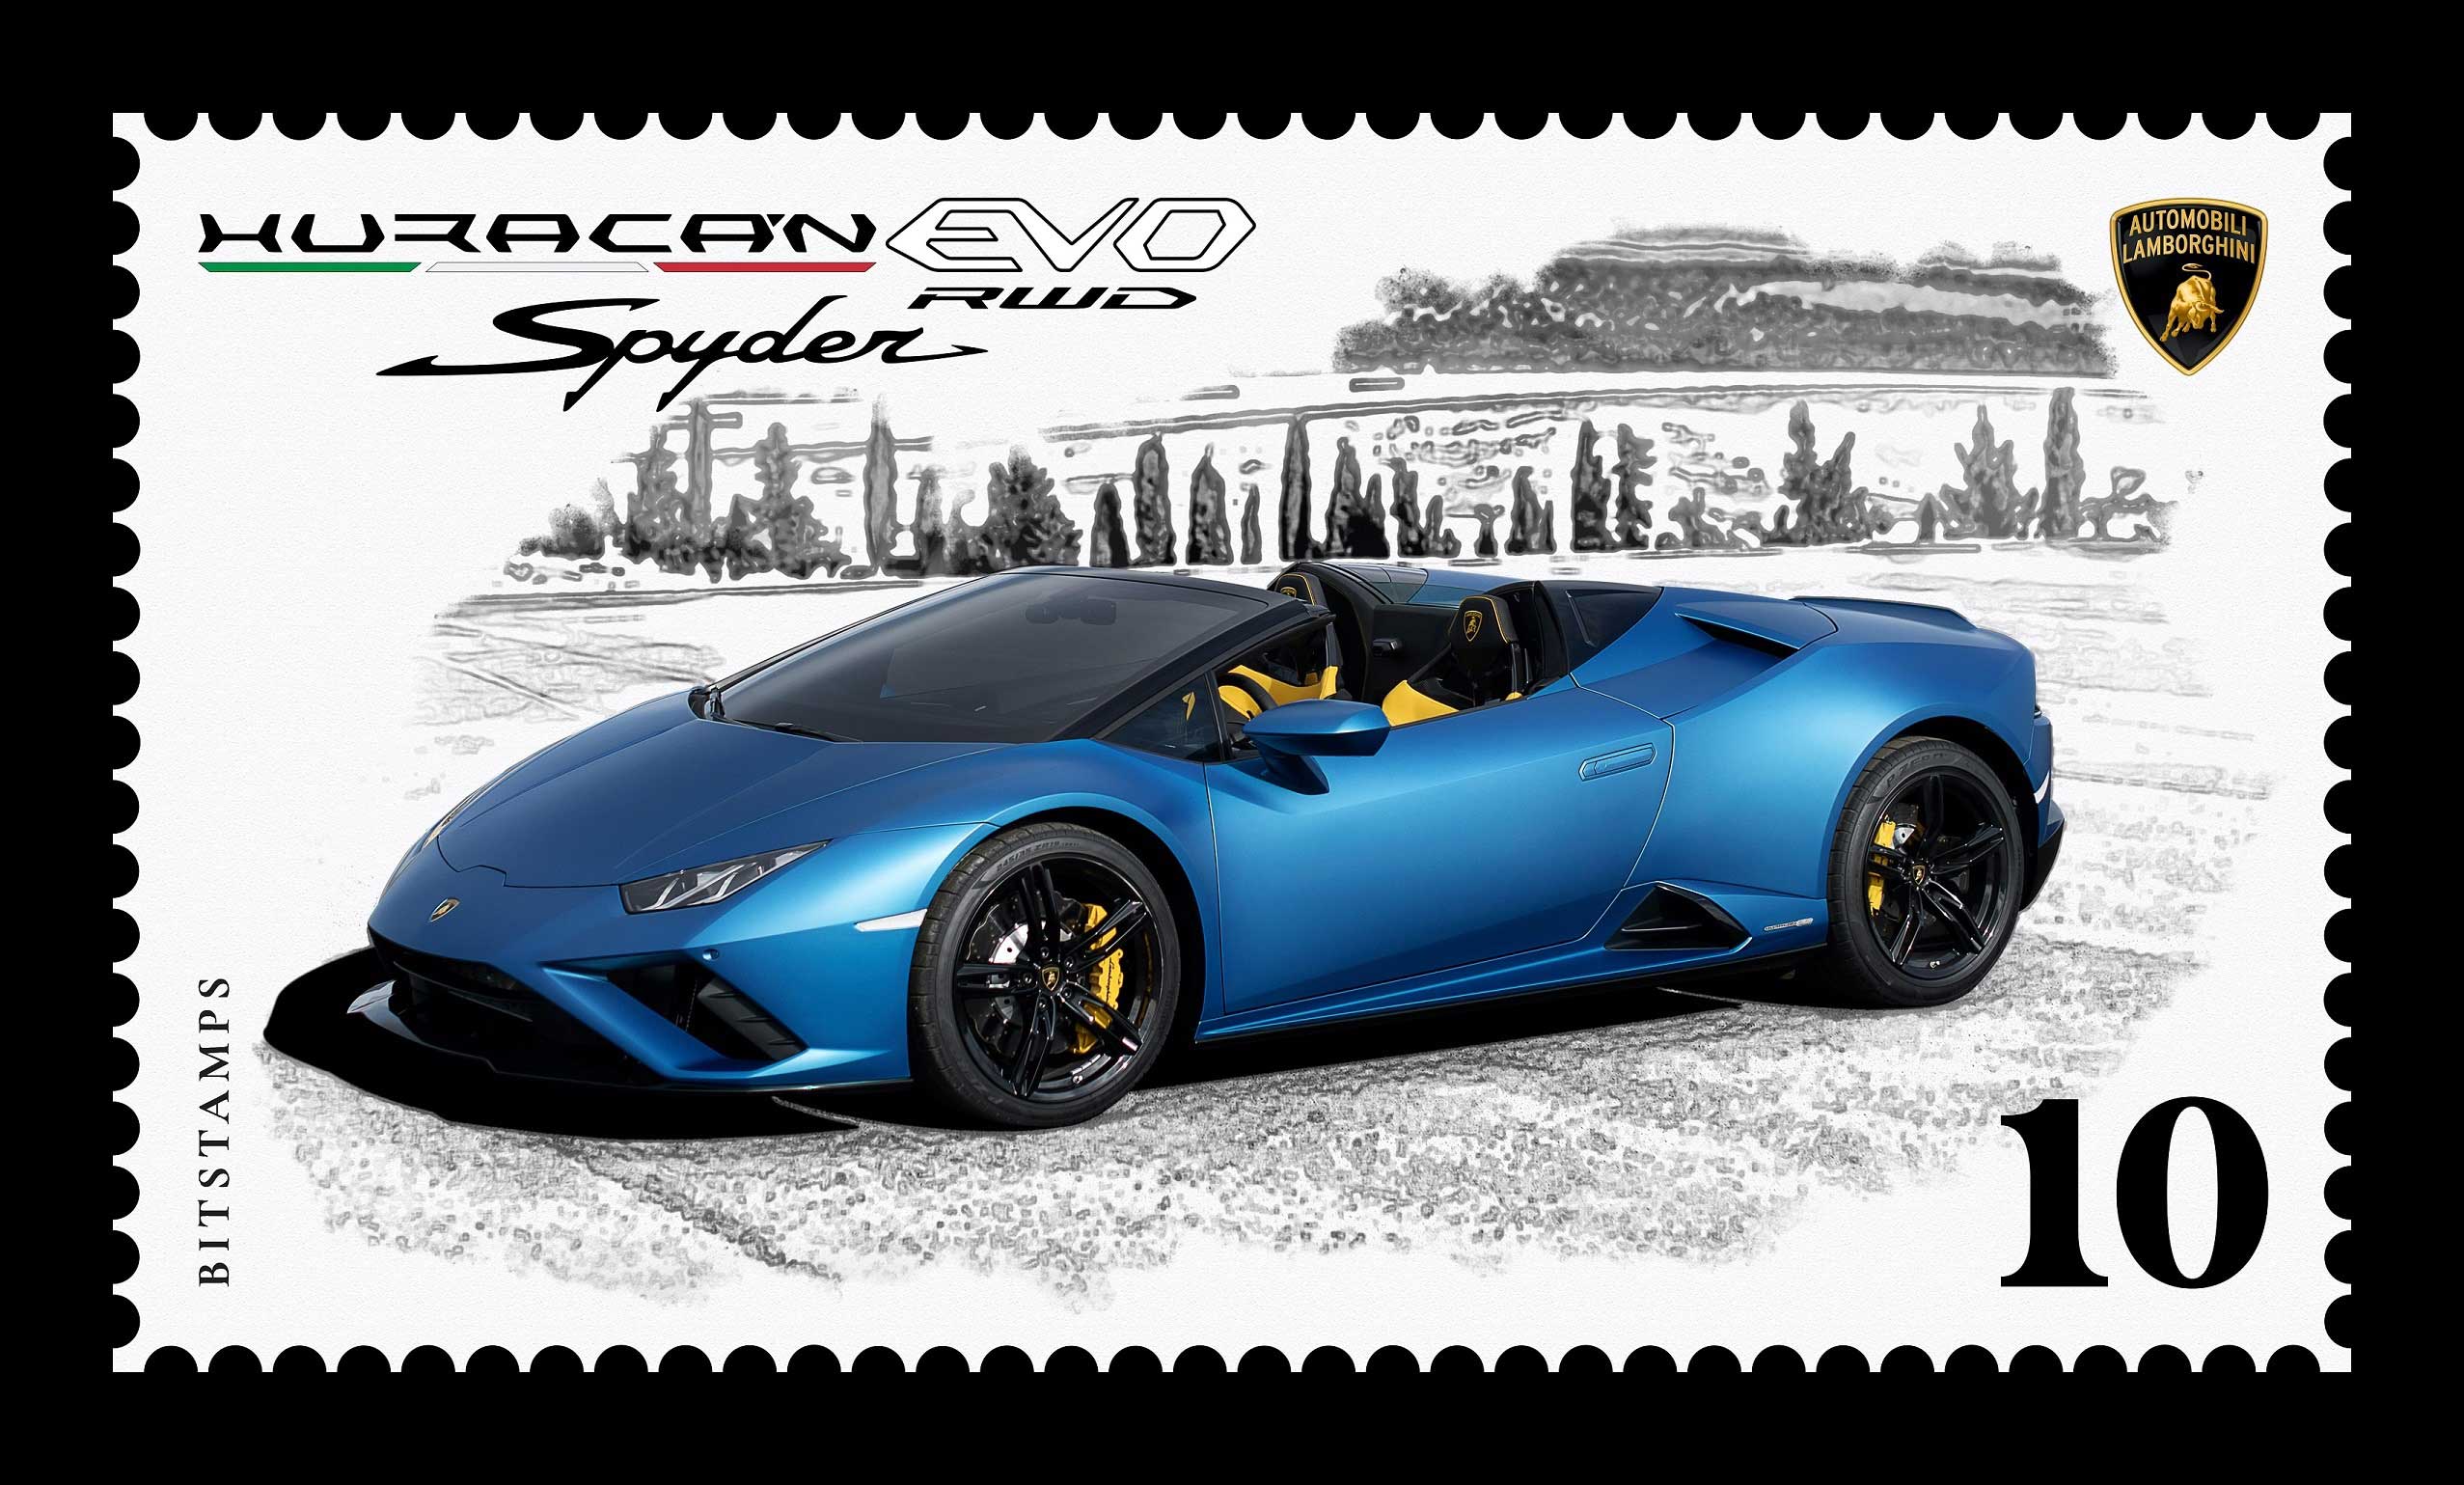 Automobili Lamborghini launches its first collector’s digital stamp